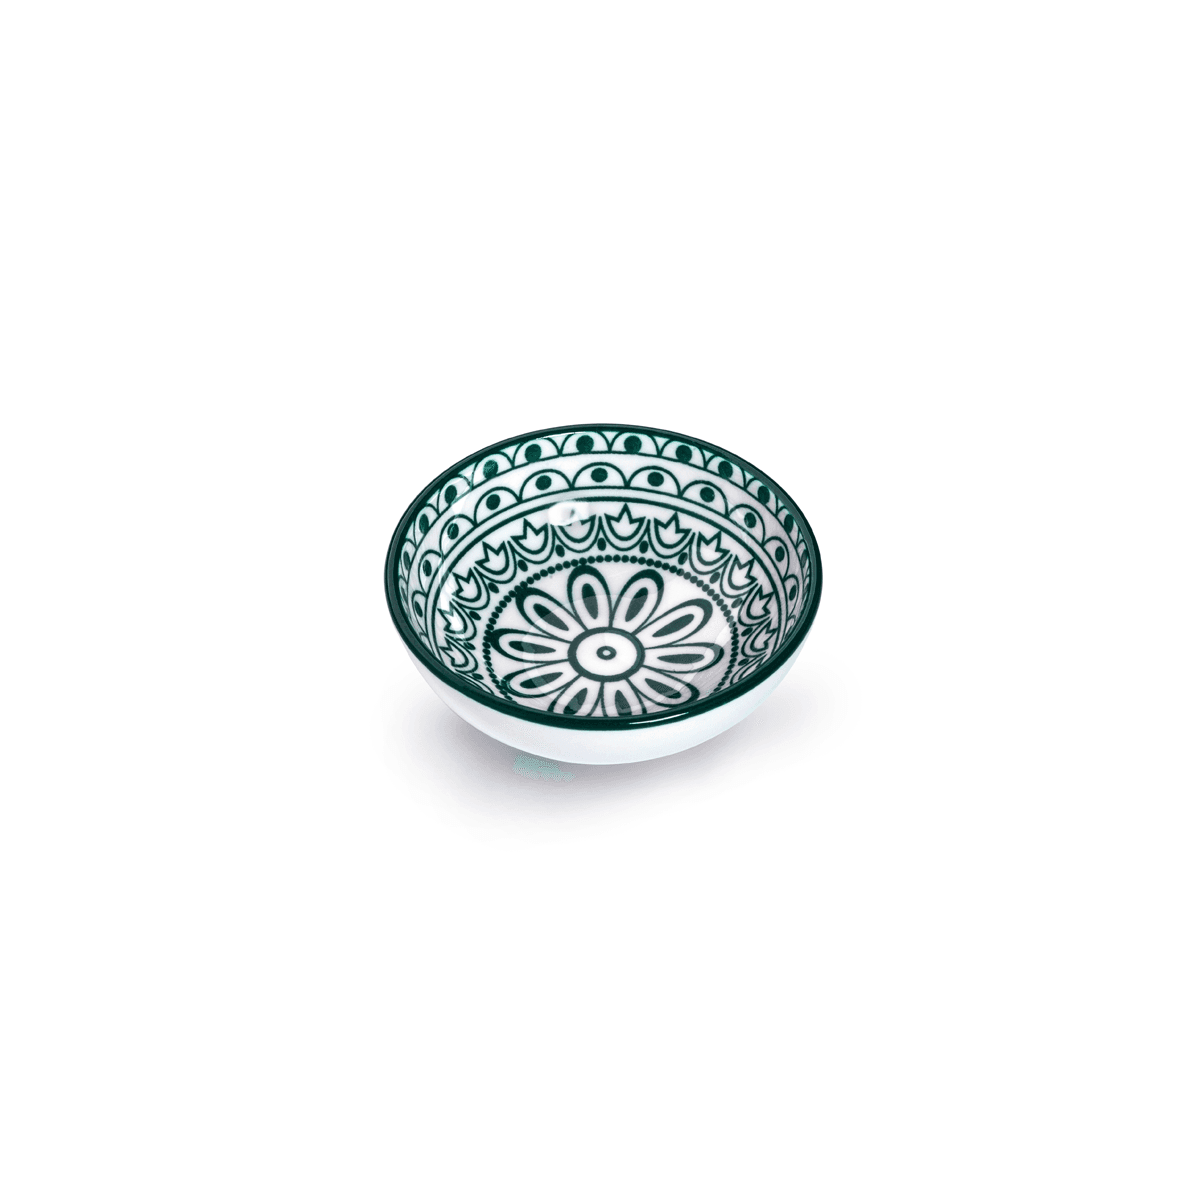 Che Brucia Arabesque Green Porcelain Round Dish 9 cm / 3.5" Green White Porcelain